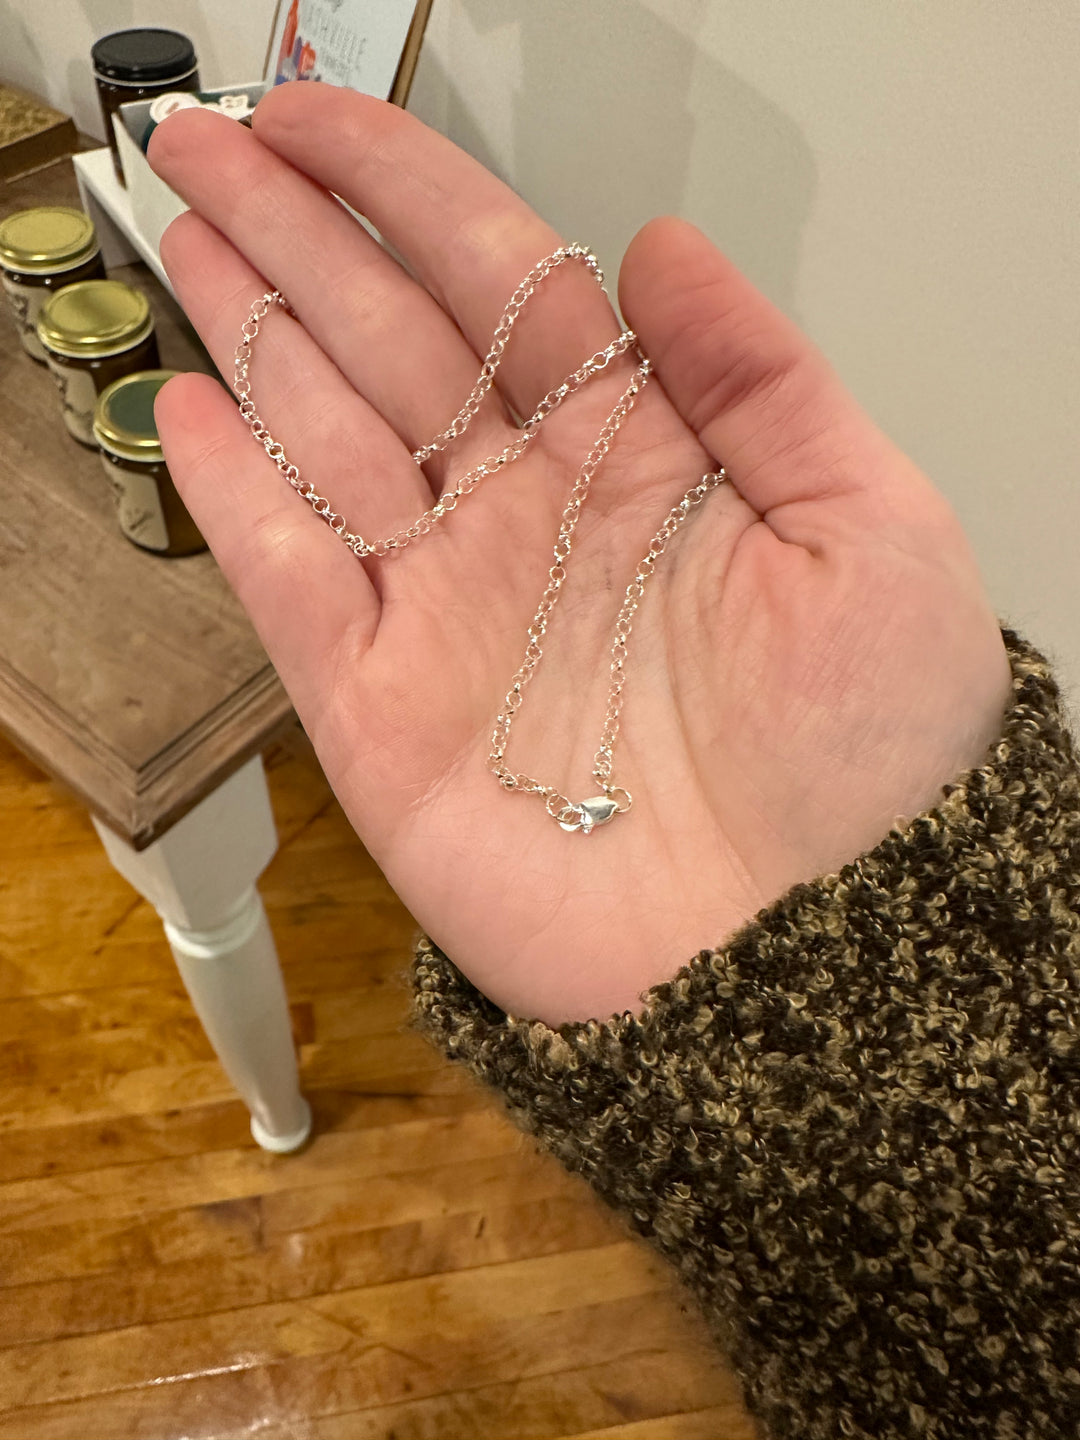 Silver Rolo Necklace